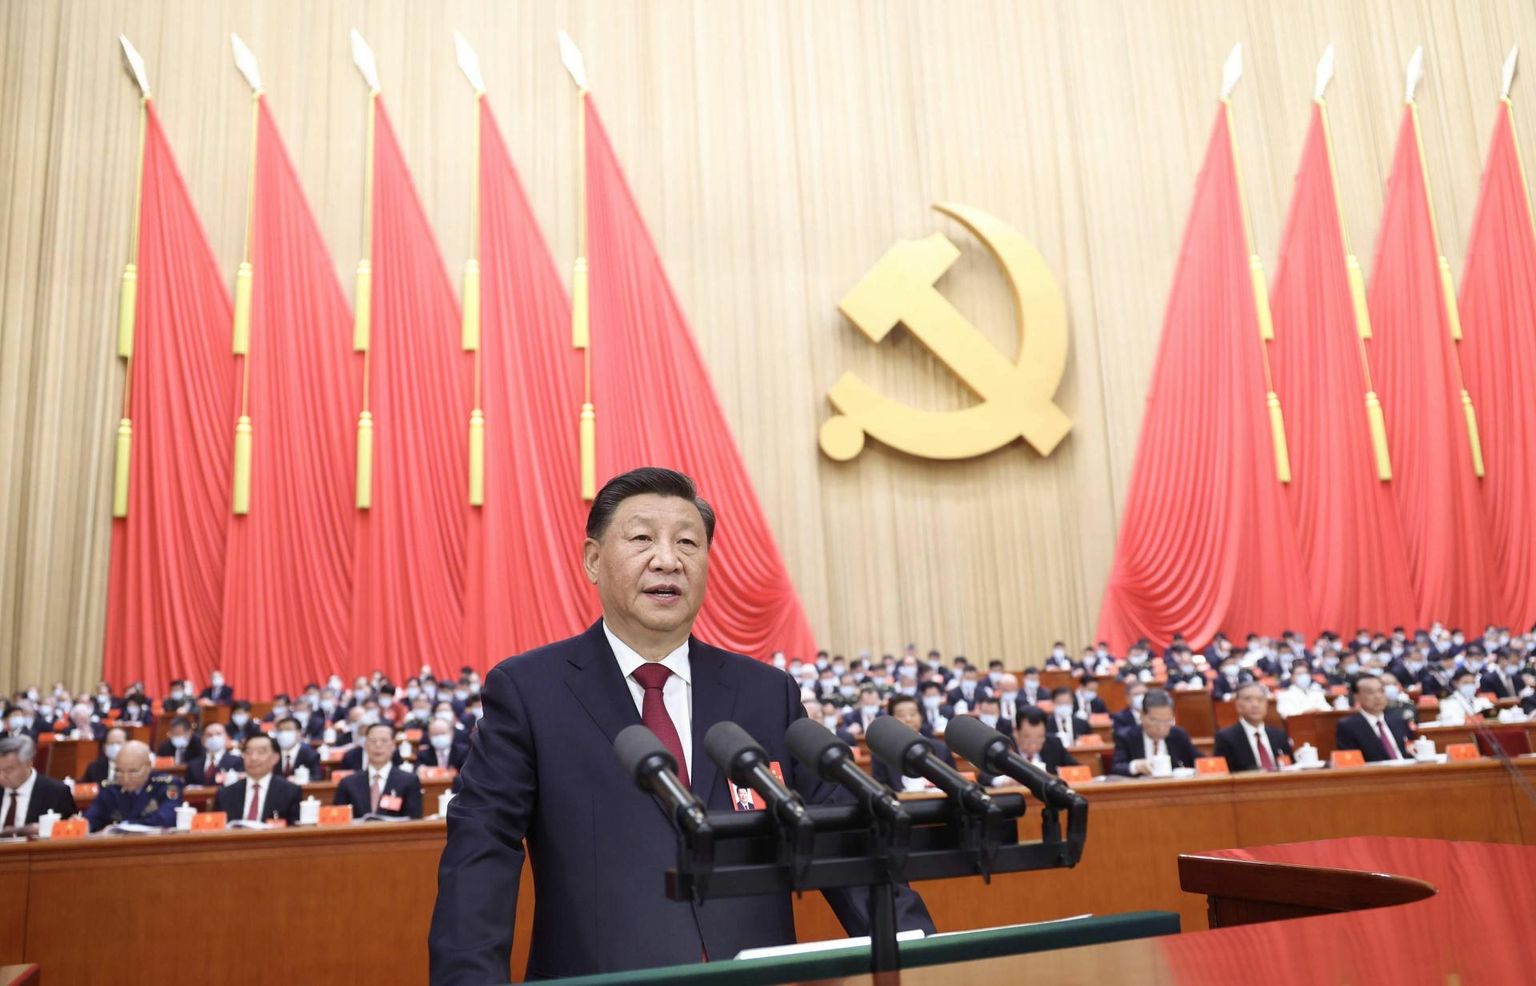 Hiina president Xi Jinping kõneleb kommunistliku partei 20. kongressi avaistungil.